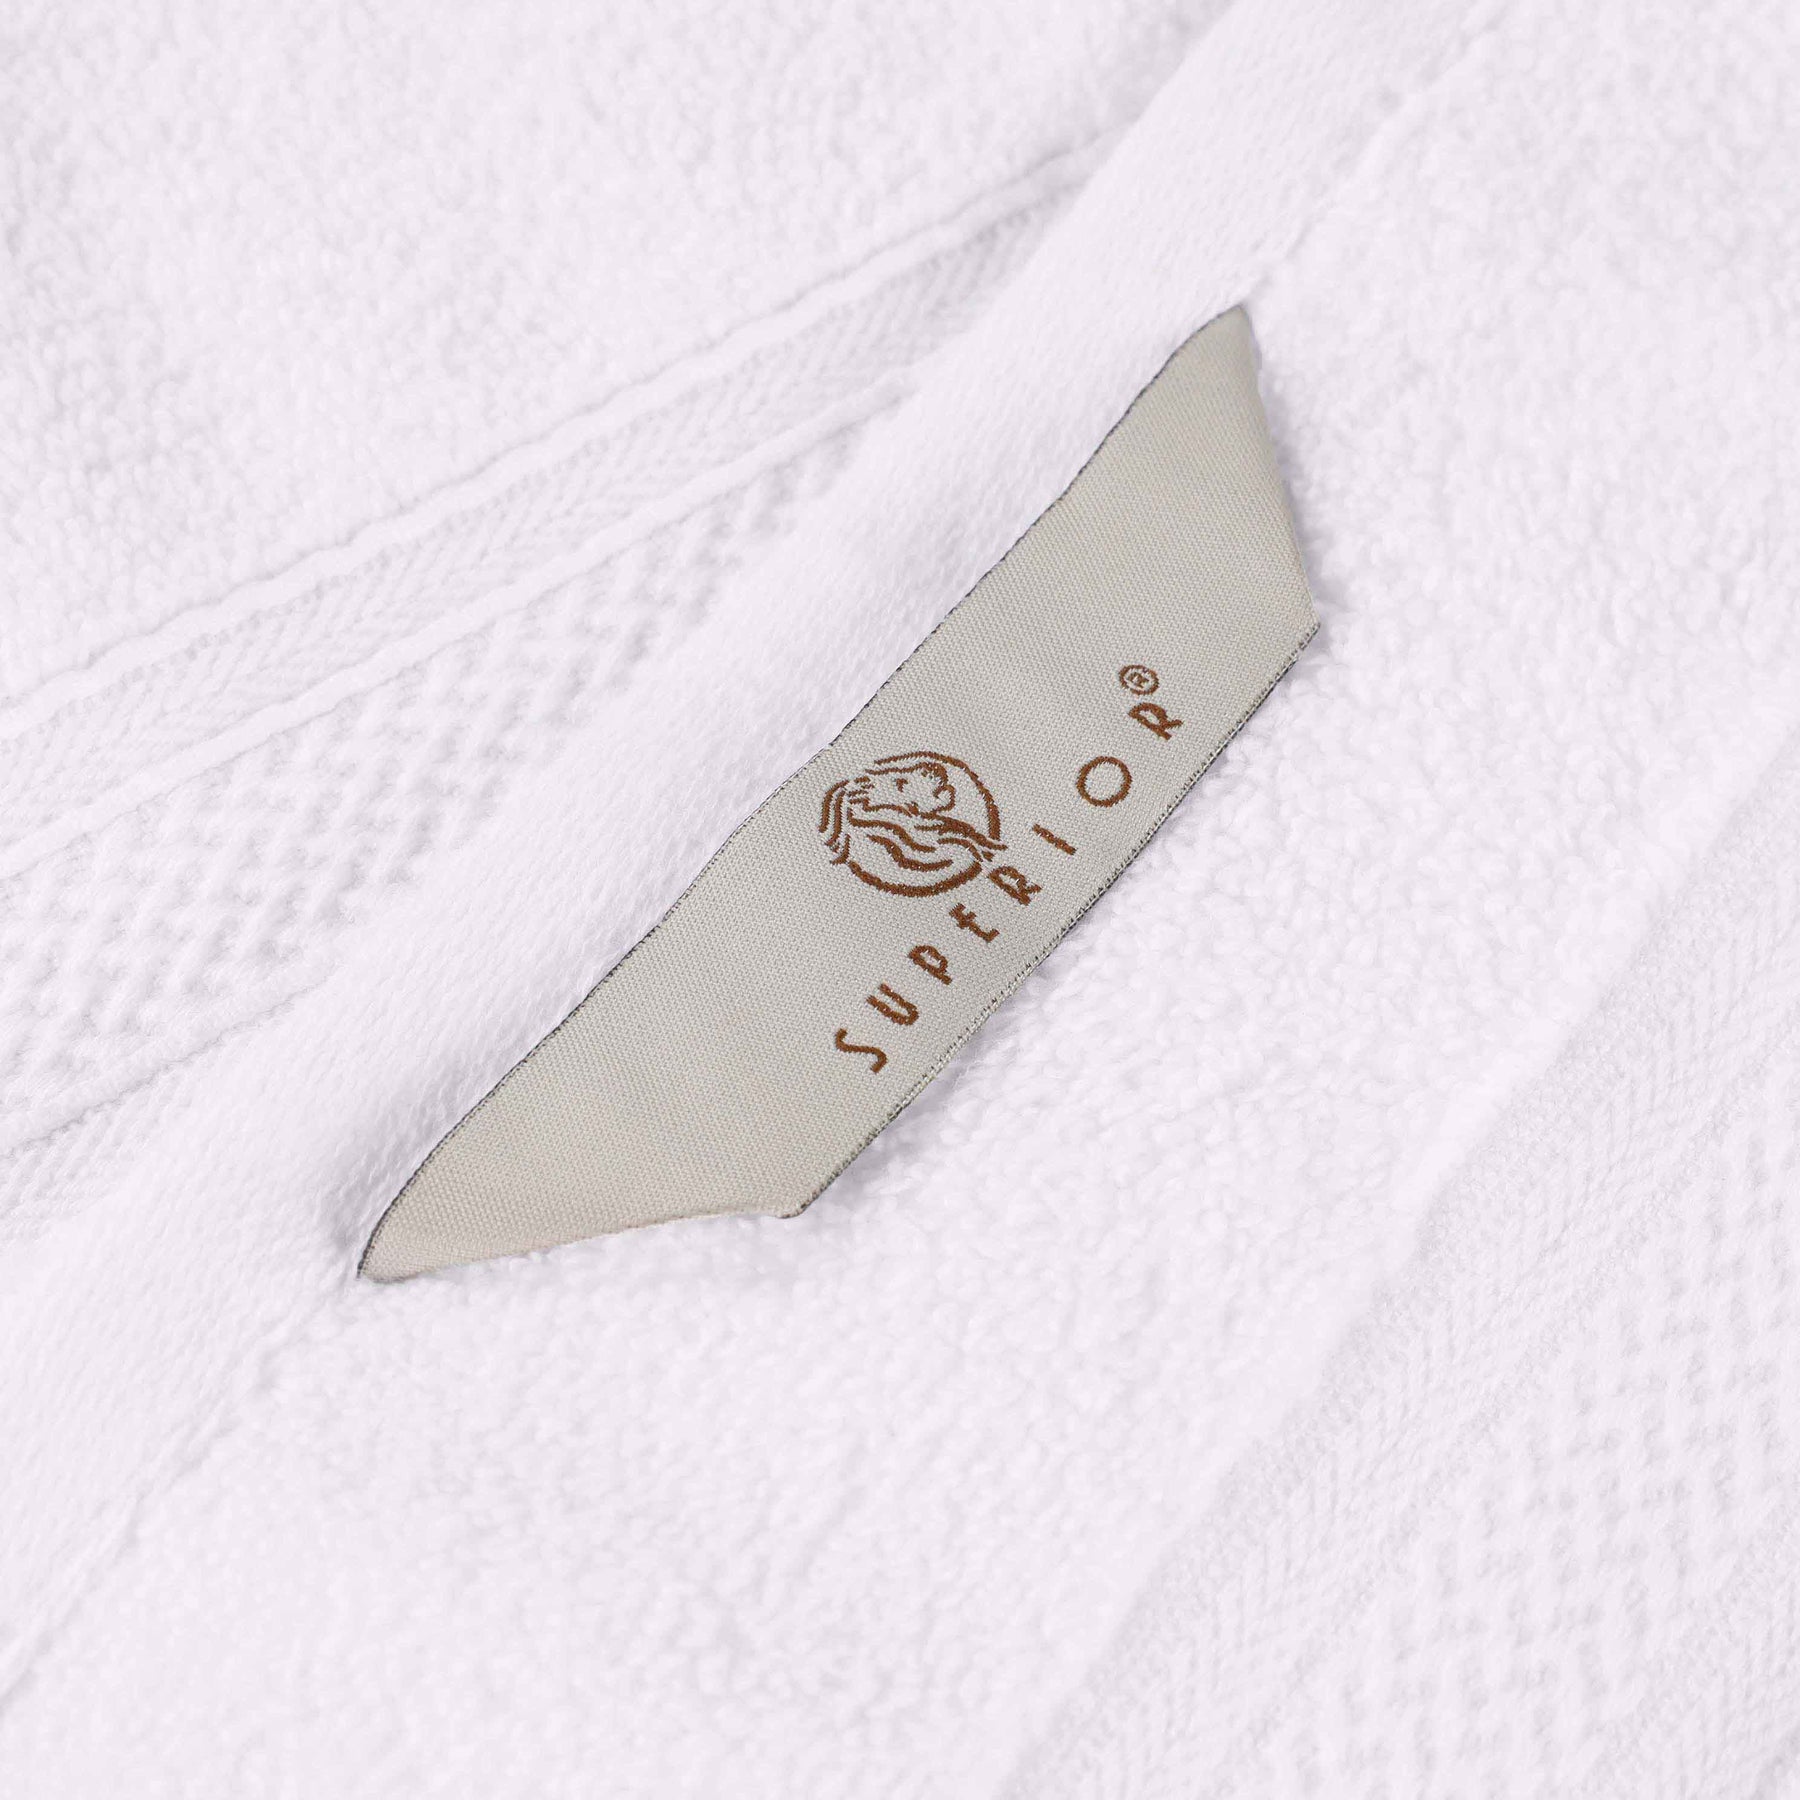 Cotton Highly Absorbent 6-Piece Jacquard Chevron Towel Set - Ivory